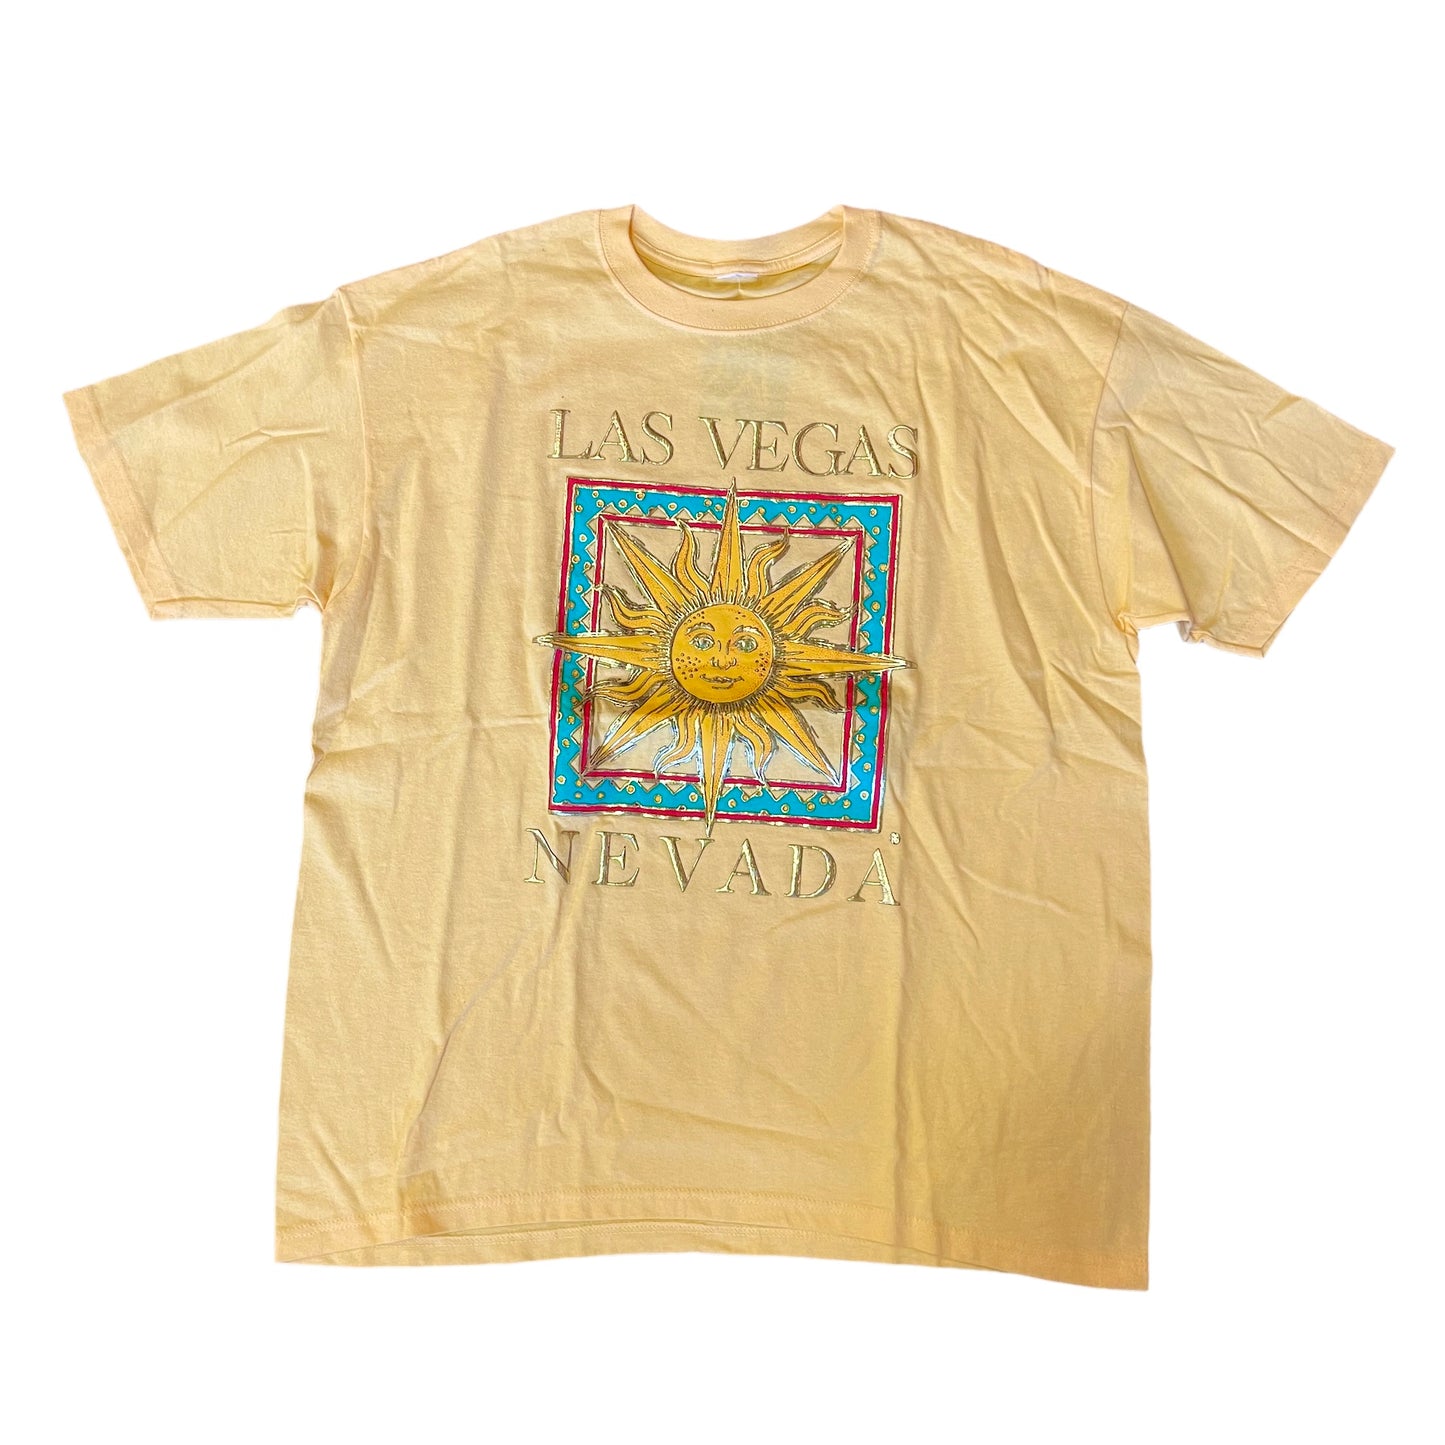 Vintage Las Vegas Nevada Shirt